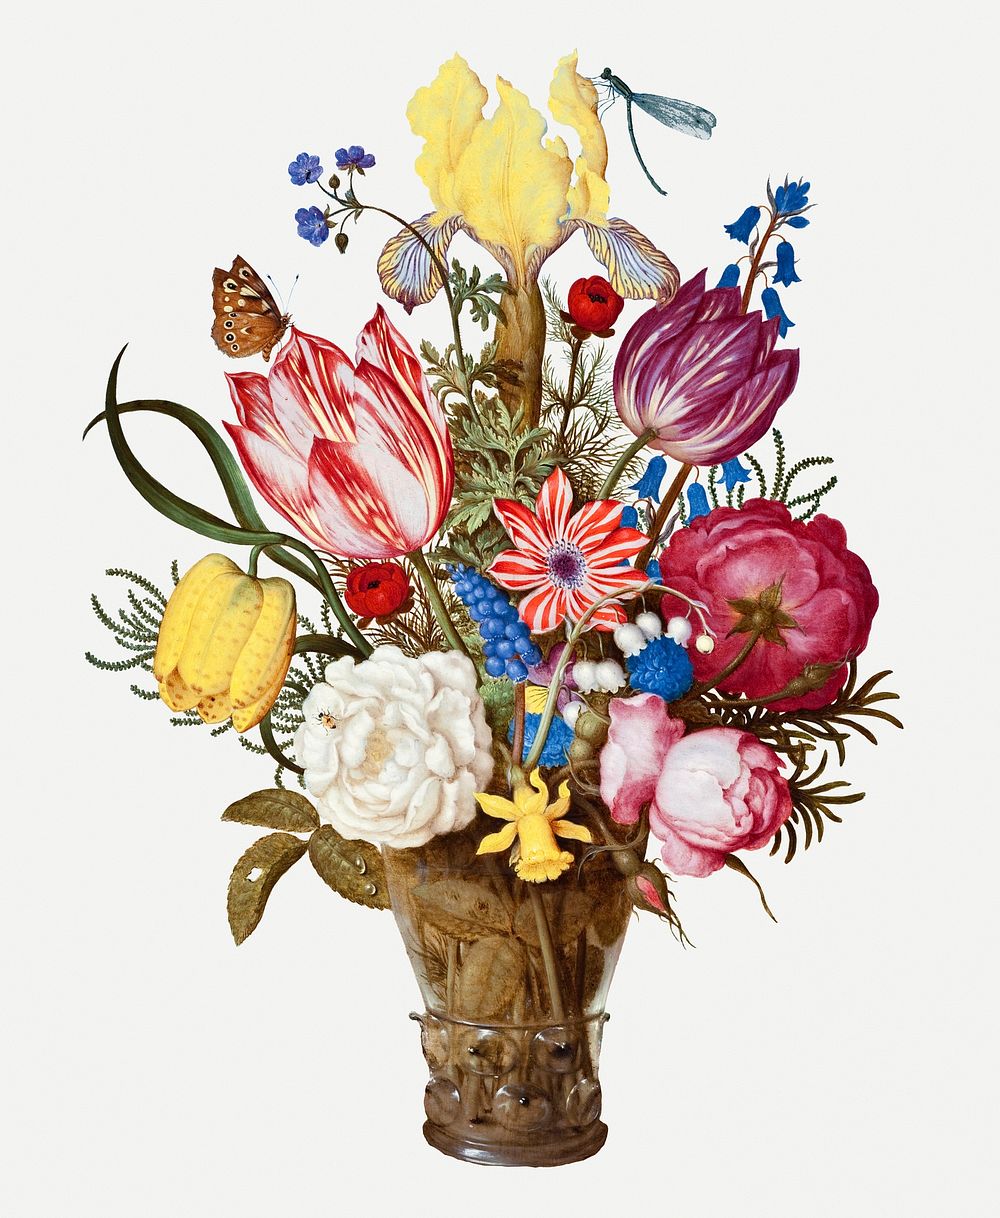 Vintage flower illustration, remix from artworks by Ambrosius Bosschaert